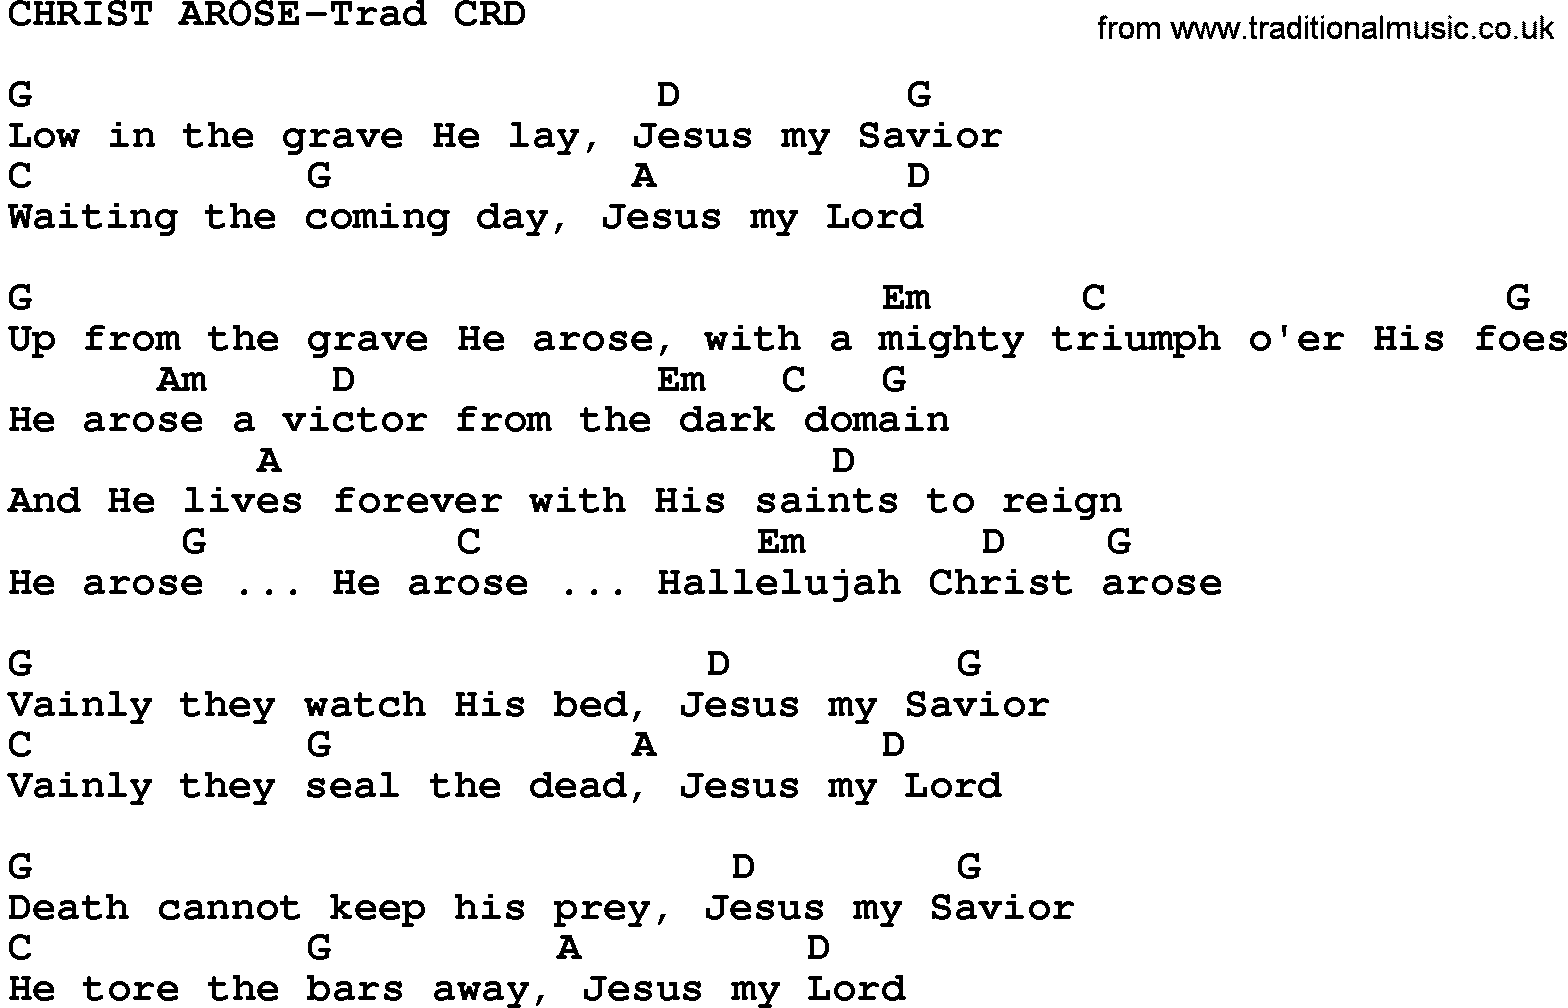 Gospel Song: Christ Arose-Trad, lyrics and chords.